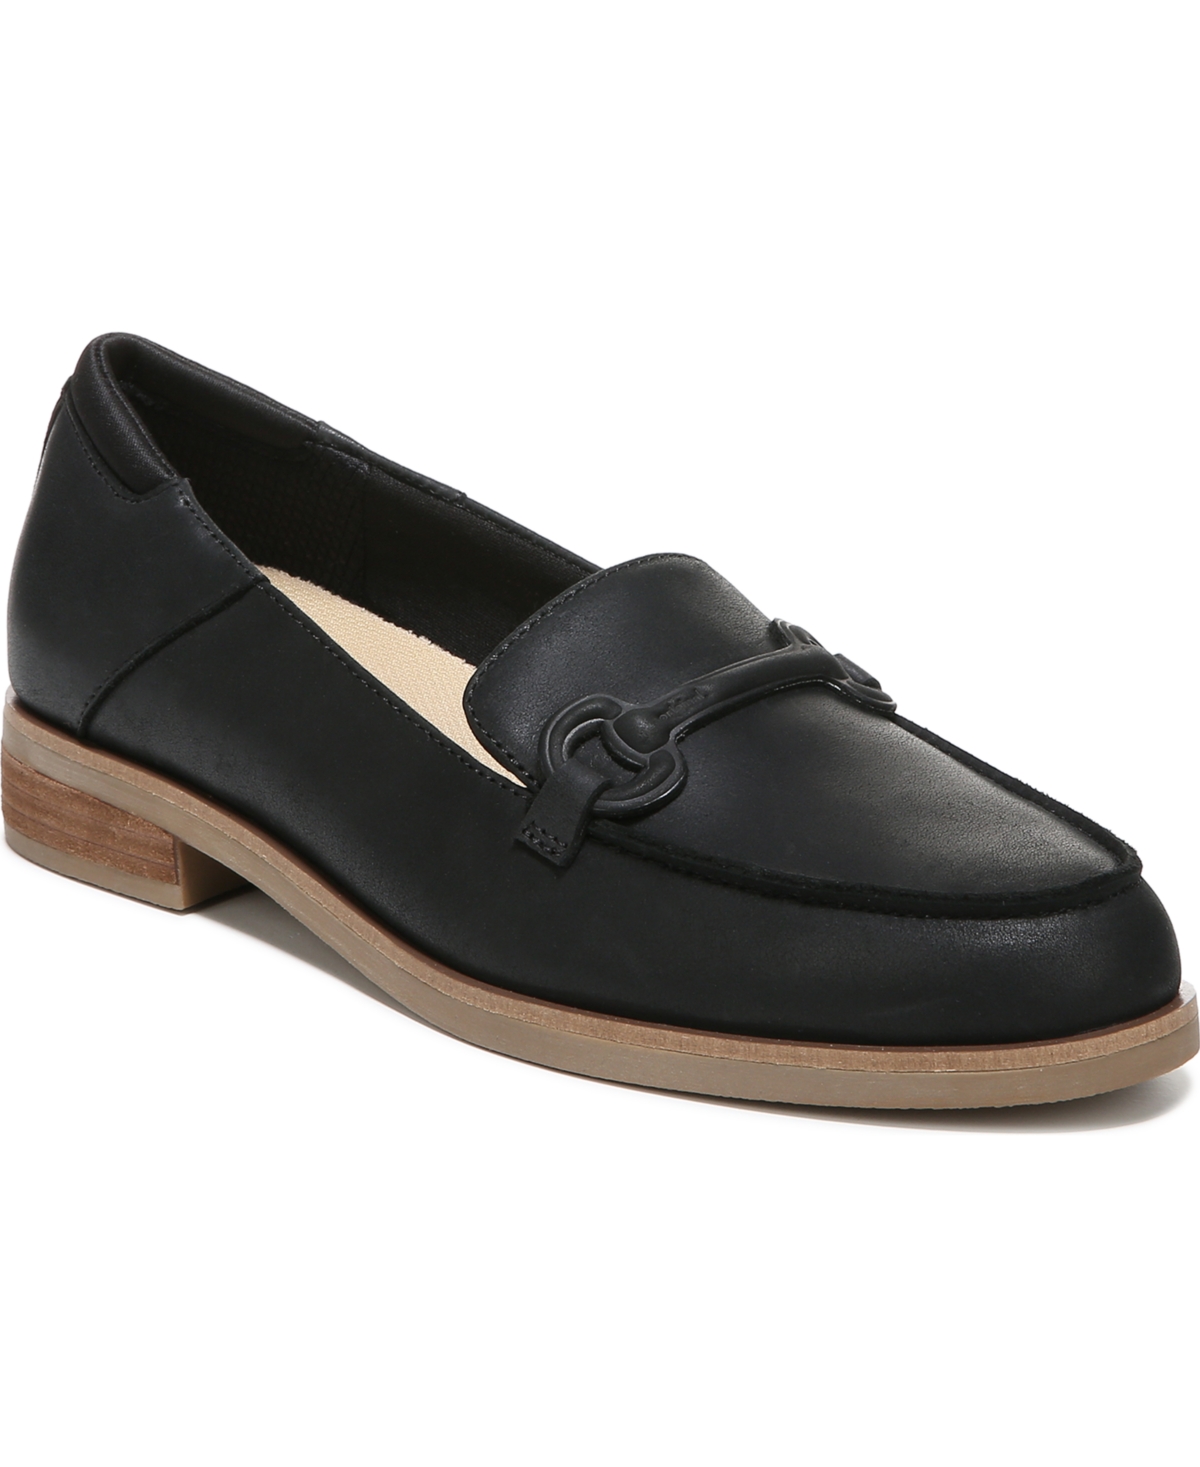 Women's Avenue Loafers - Black Leather